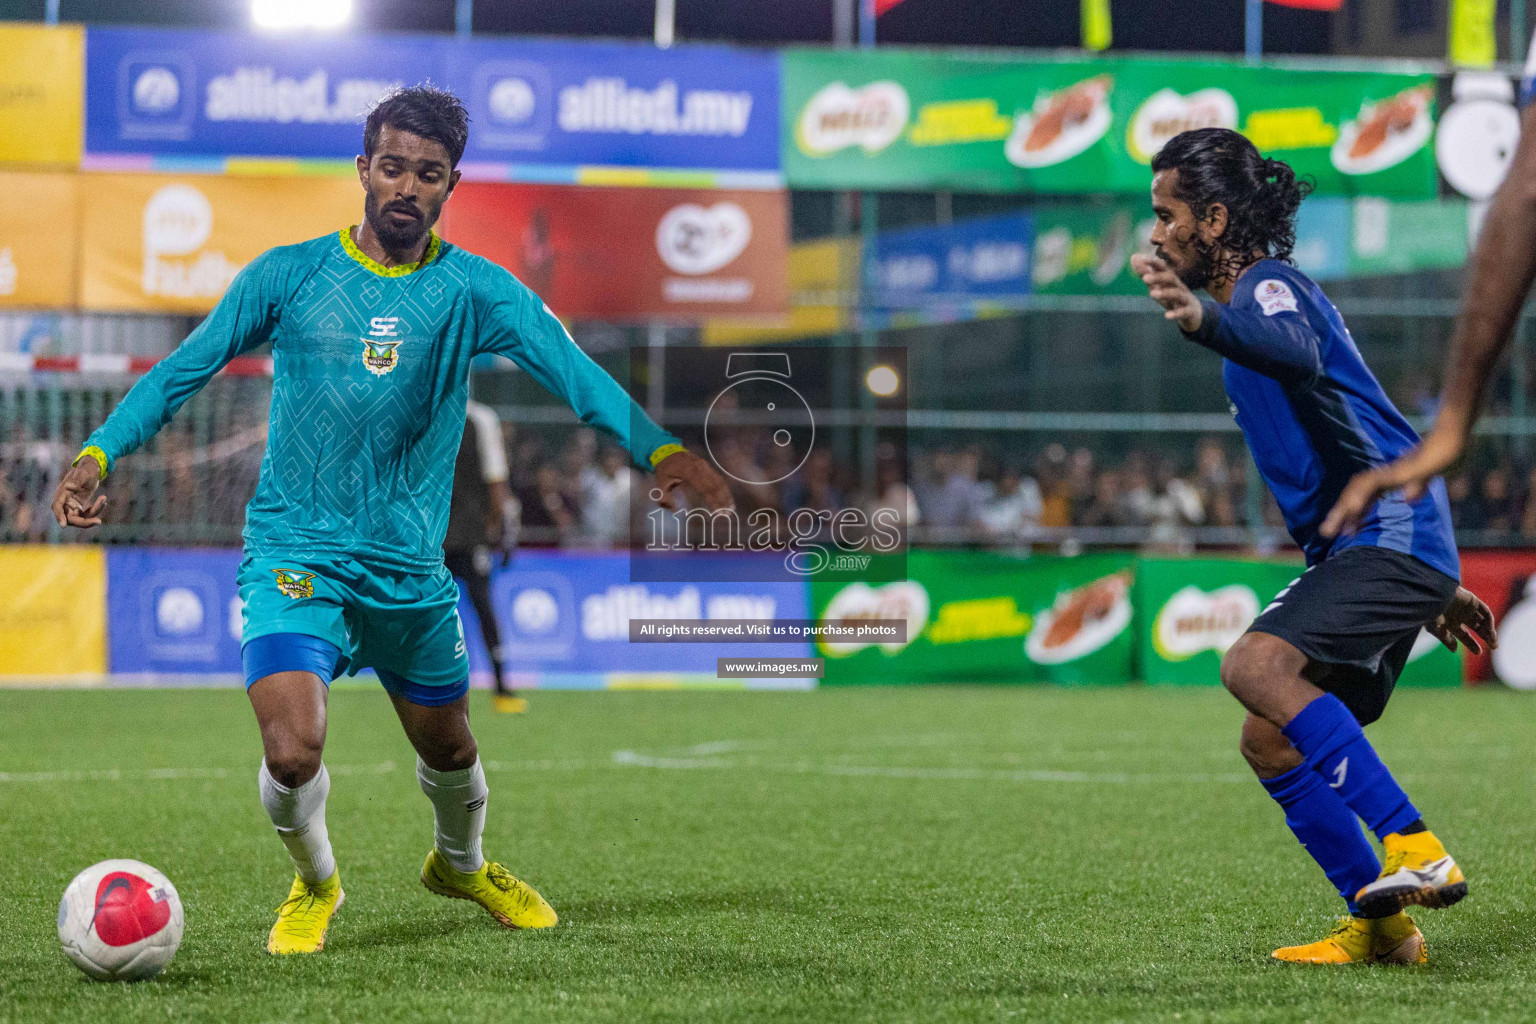 Club Maldives Cup 2022 - SF - Team Fenaka vs Club WAMCO Team Fenaka vs Club WAMCO in Semi-finals of Club Maldives Cup 2022 was held in Hulhumale', Maldives on Sunday, 30th October 2022. Photos: Ismail Thoriq / images.mv